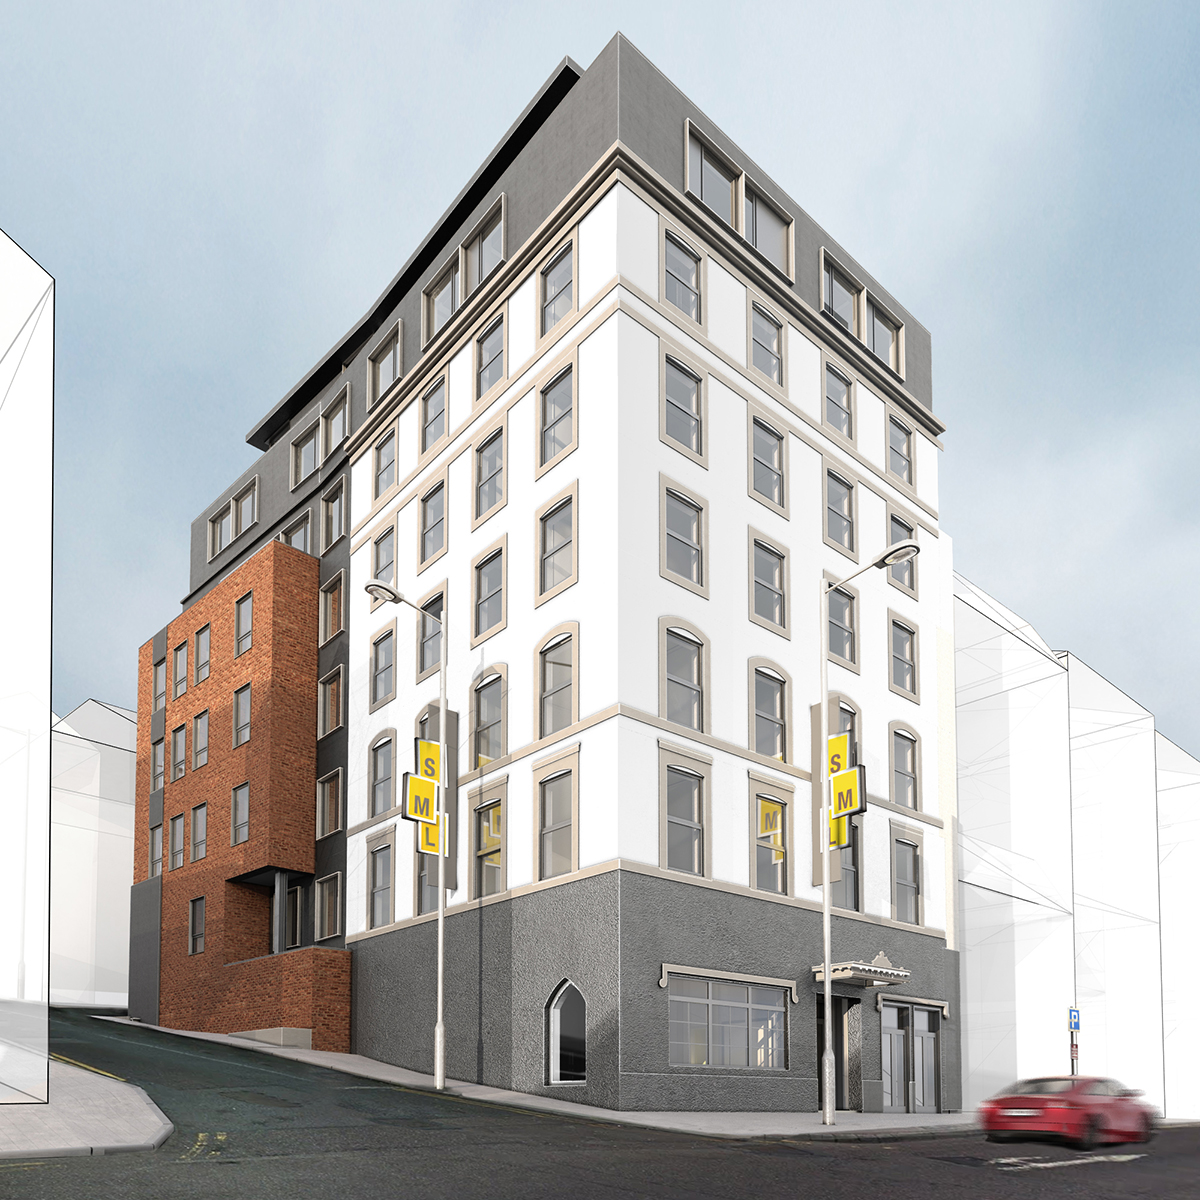 Windsor Hotel ‘micro-sleeper’ for Cork City. Architecture Ireland, Urban Design, Dublin/Cork/Kerry Architecture